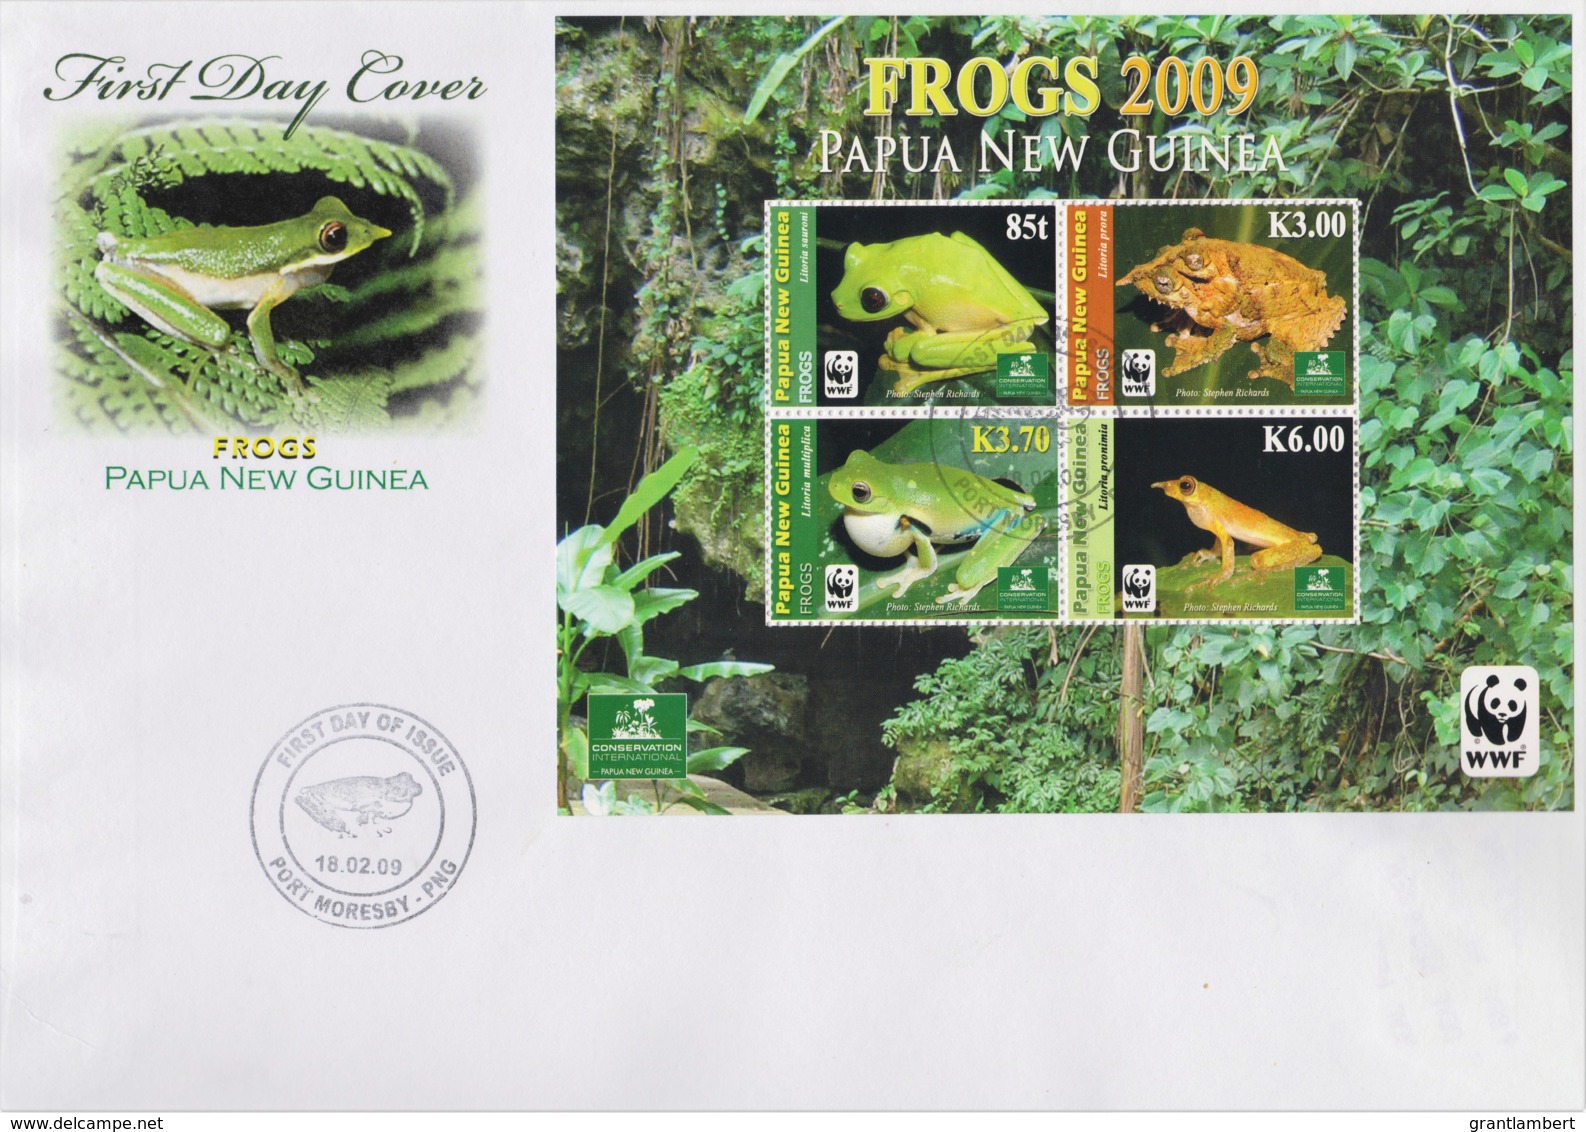 Papua New Guinea 2009 Frogs Minisheet FDC  WWF - Papua New Guinea